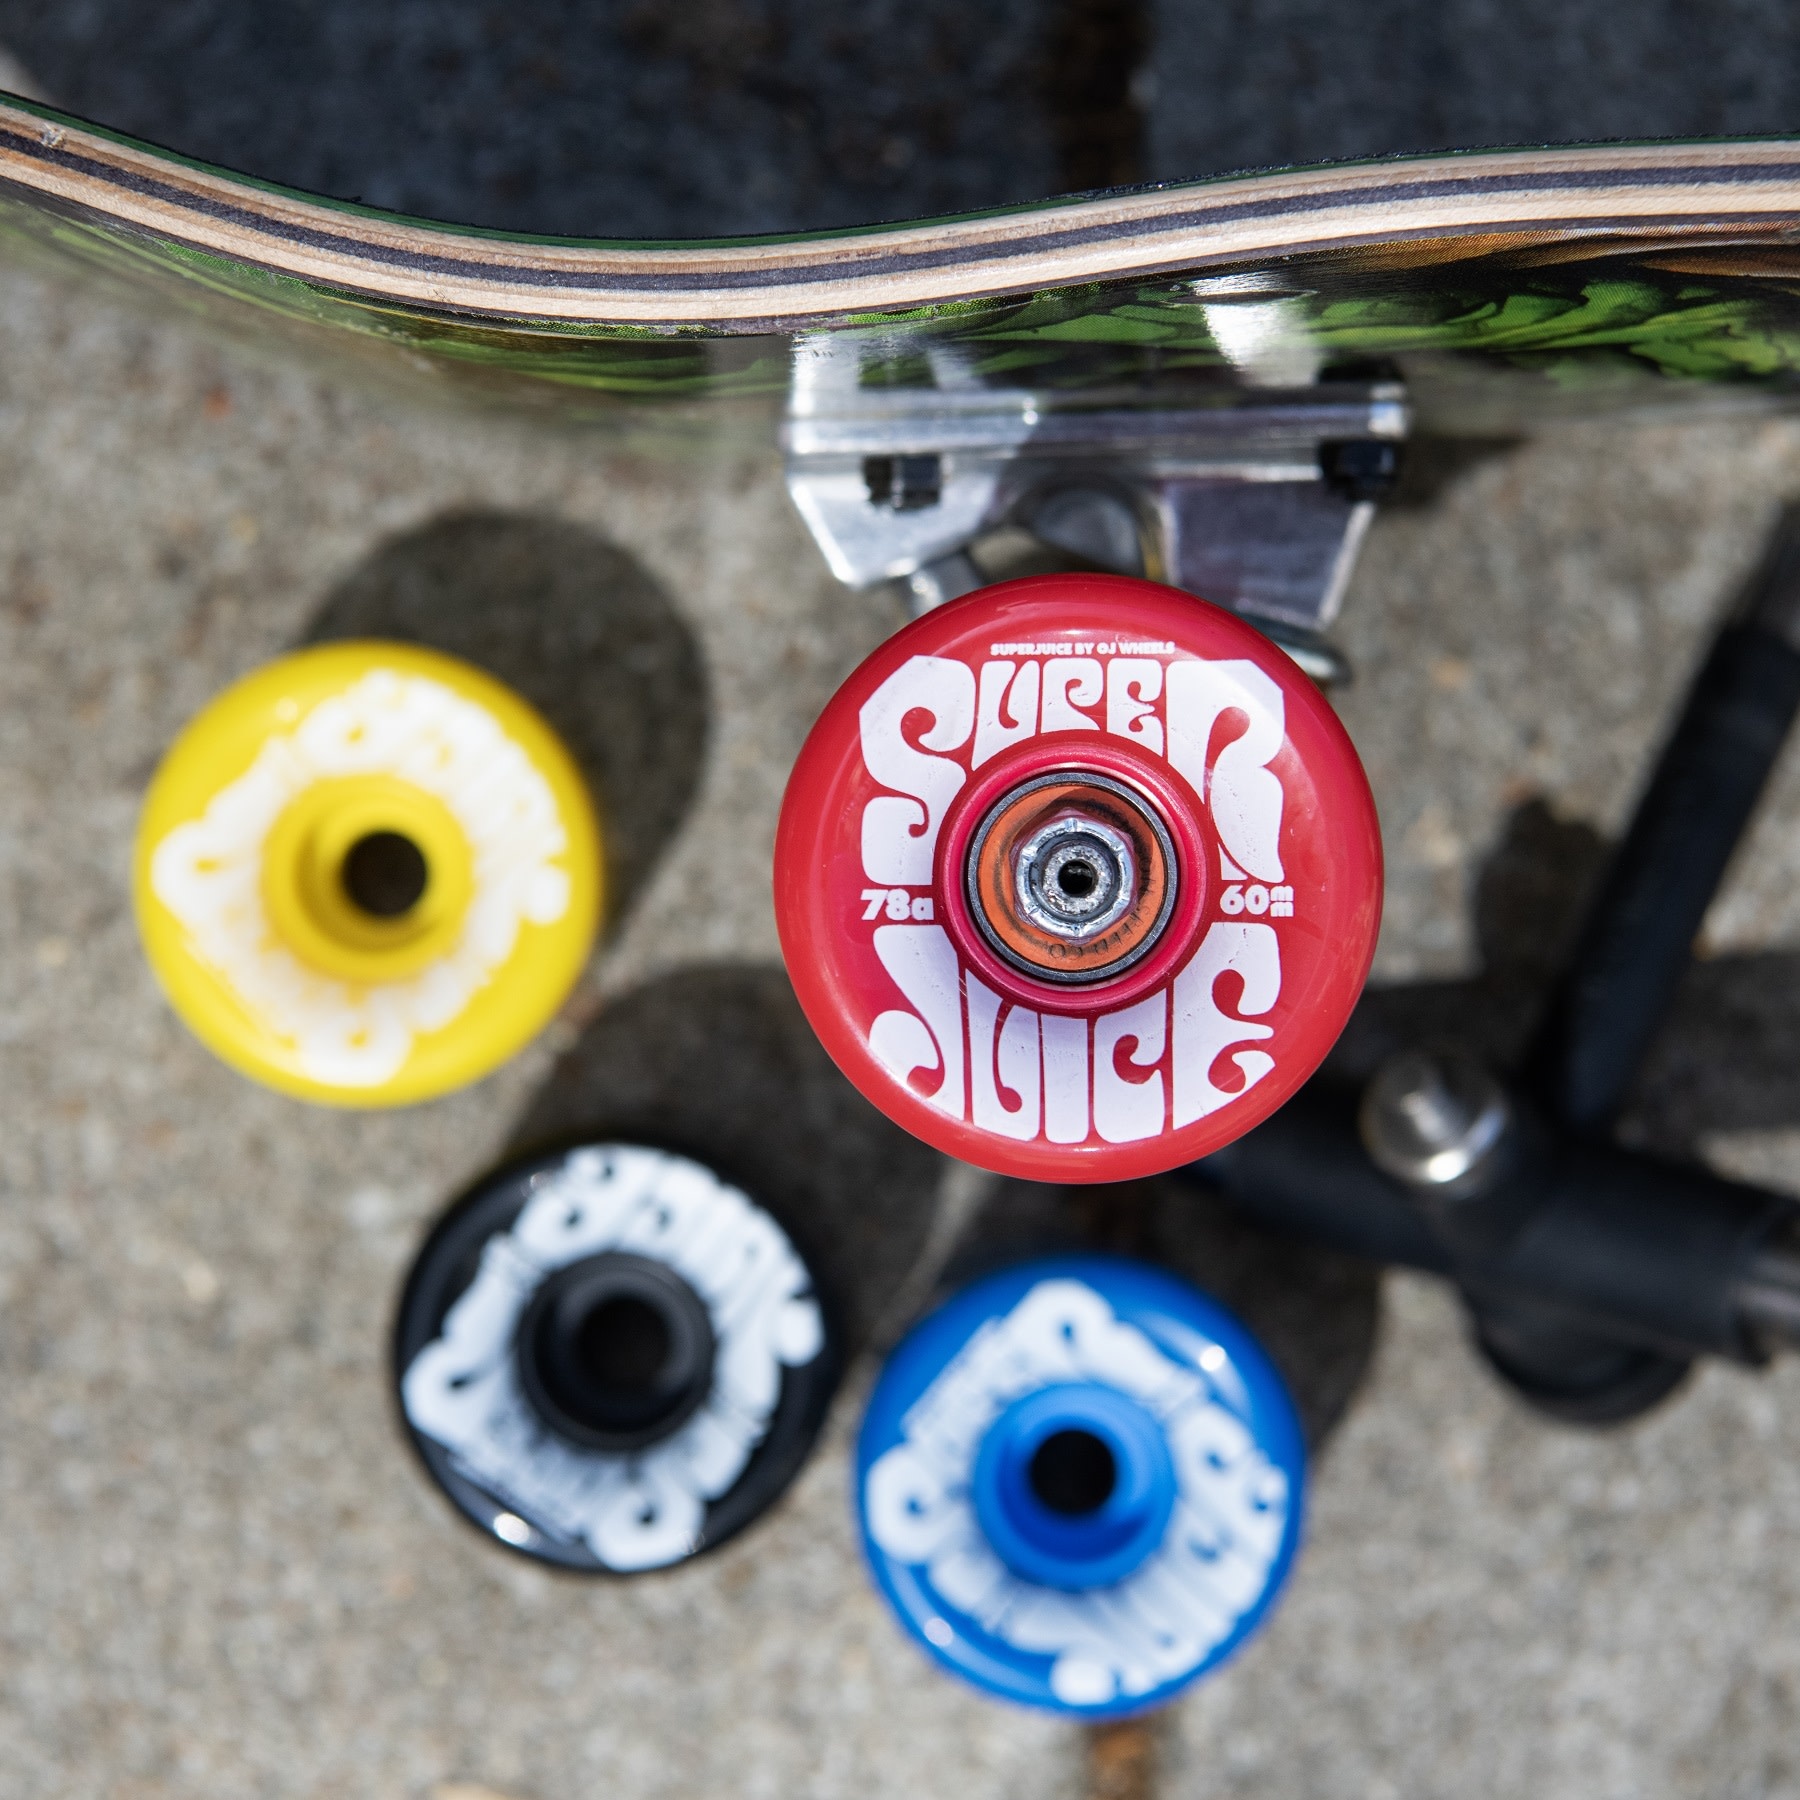 OJ Wheels Super Juice CMYK Mix Up 60mm 78a